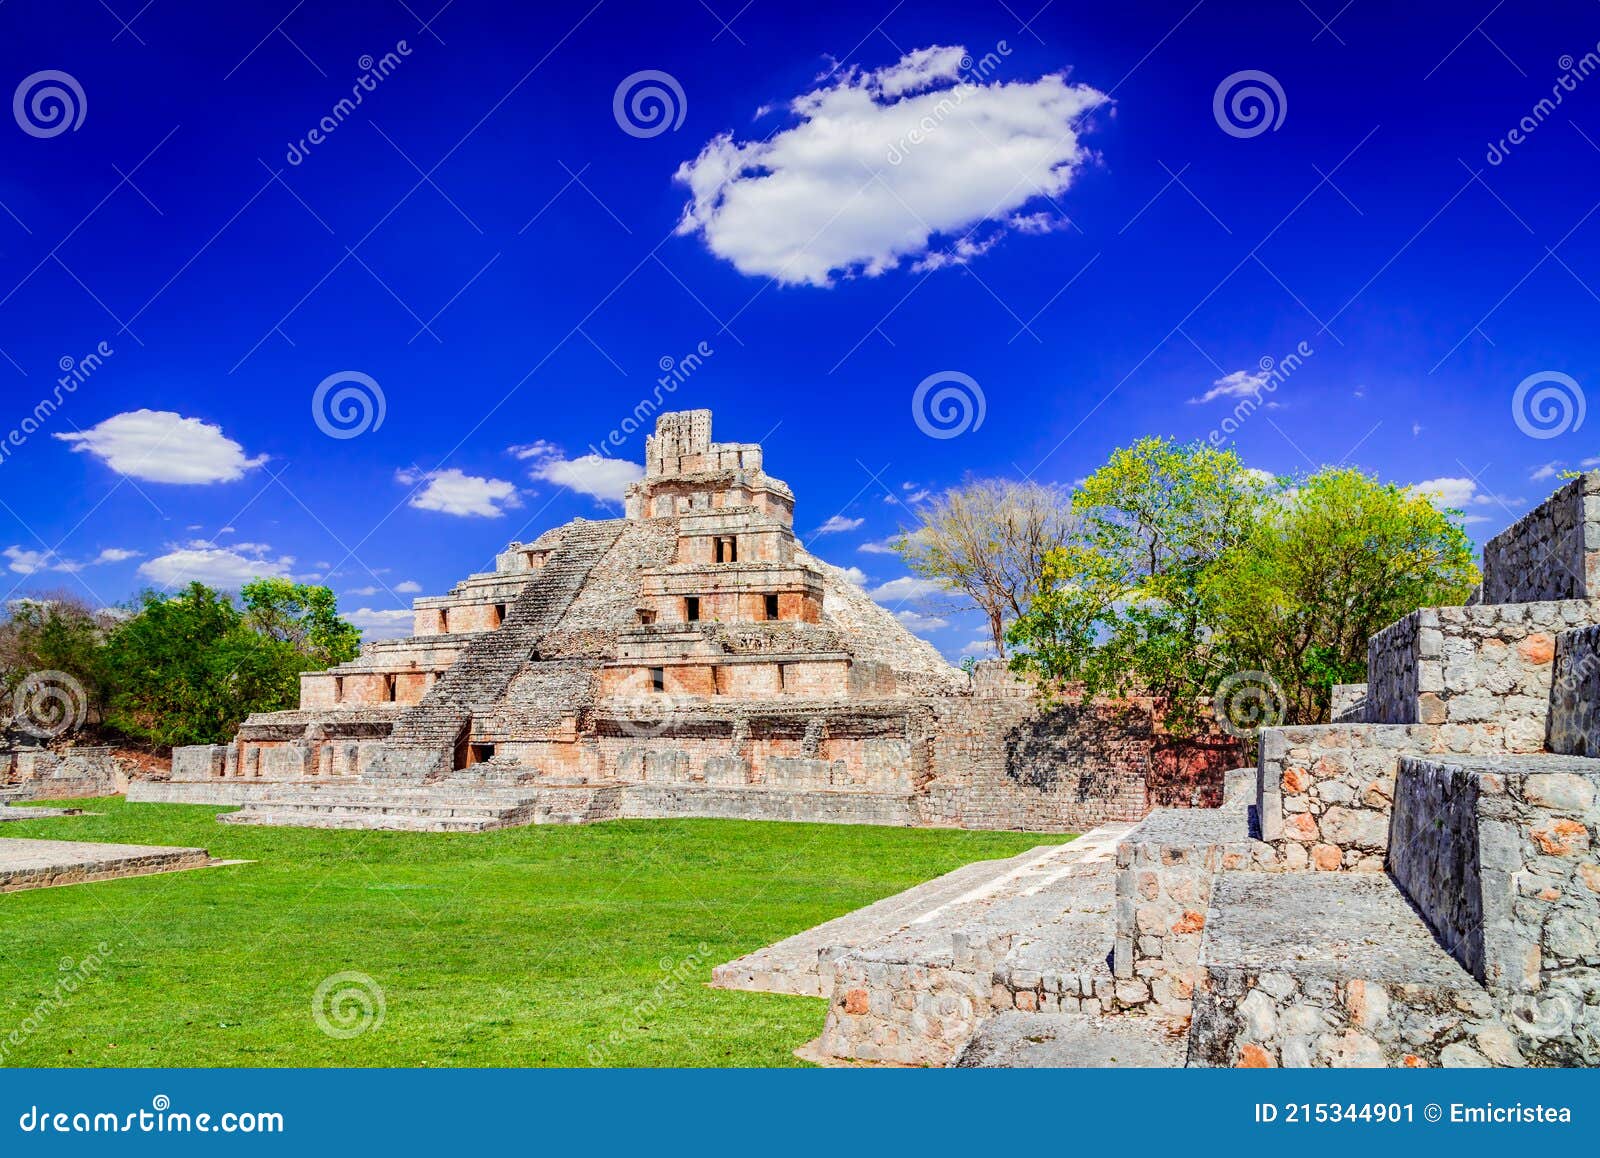 edzna, mexico - maya ruins in yucatan peninsula